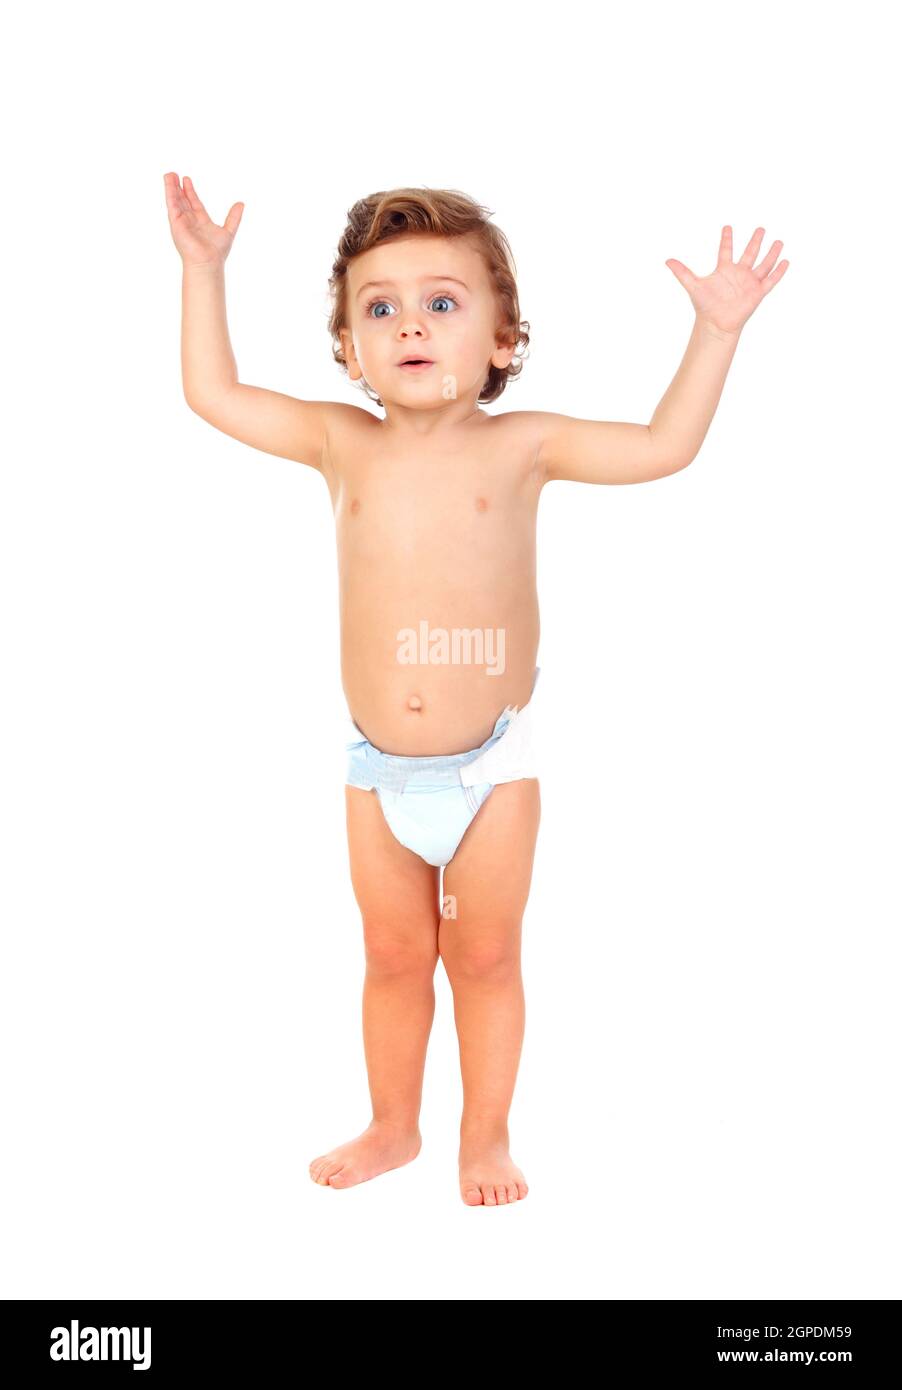 Little Boy Diaper Image Photo (Free Trial) Bigstock, 44% OFF